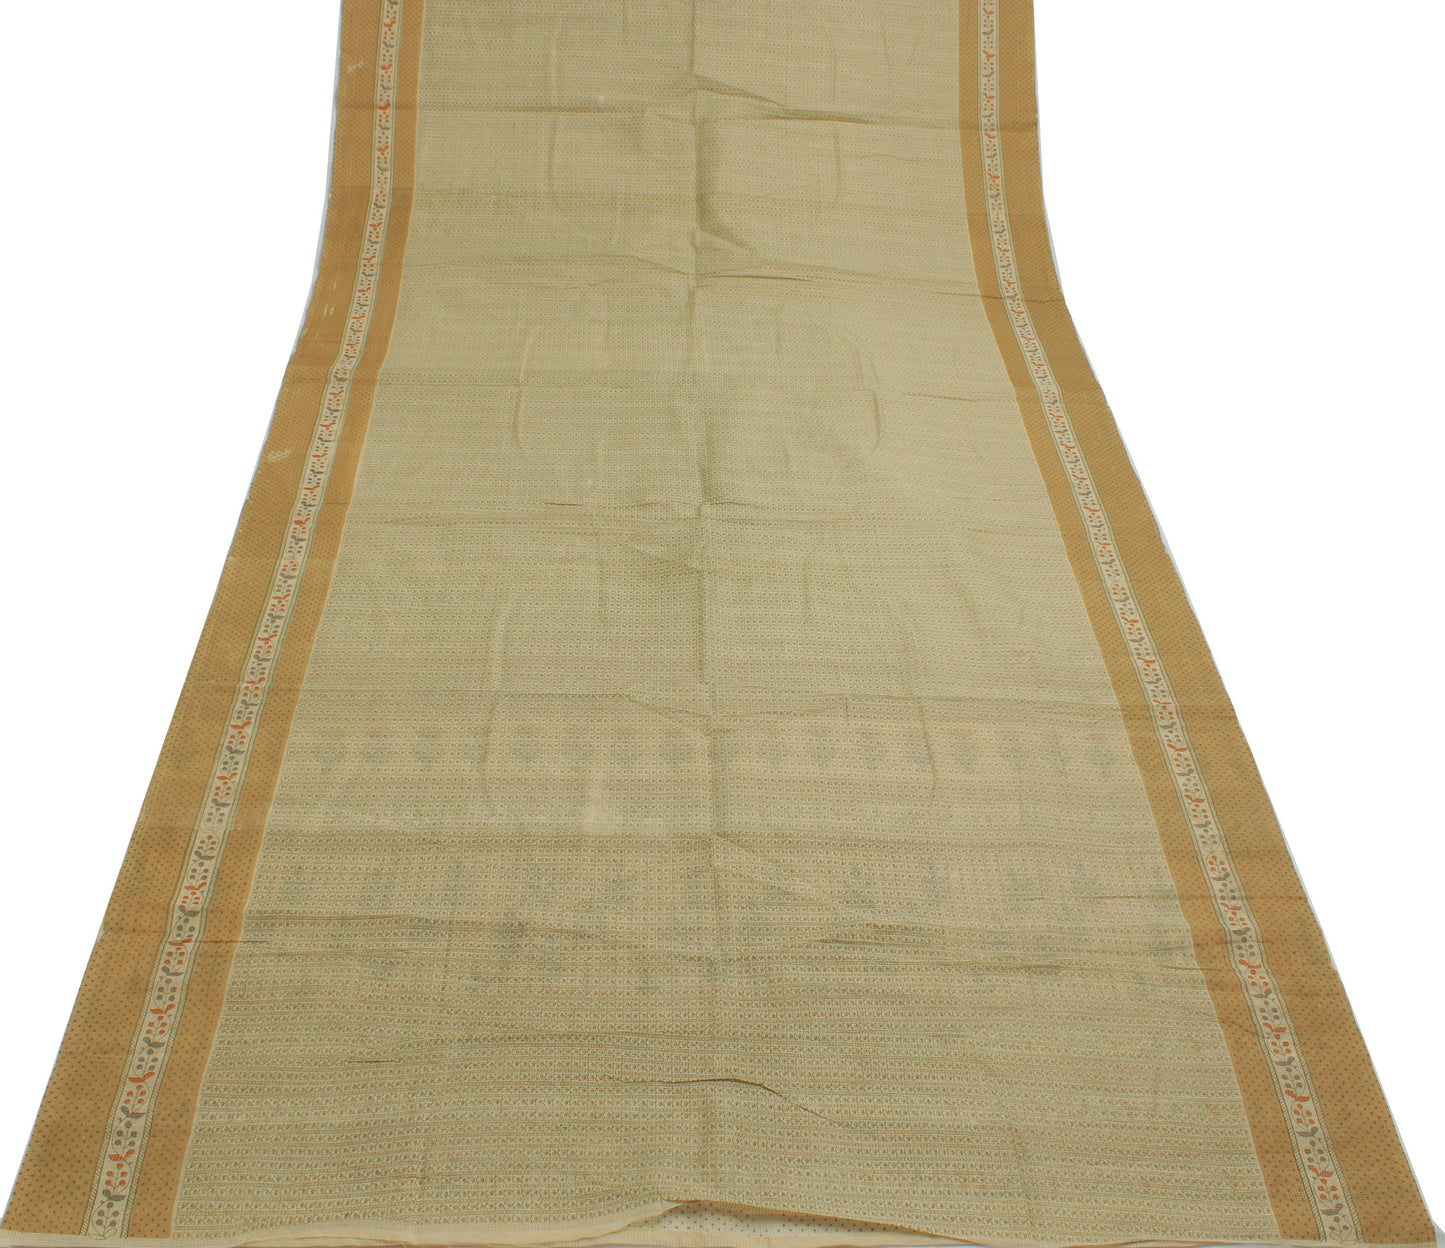 Sushila Vintage Indian Saree Blend Cotton Printed Floral 5 Yard Craft Fabric